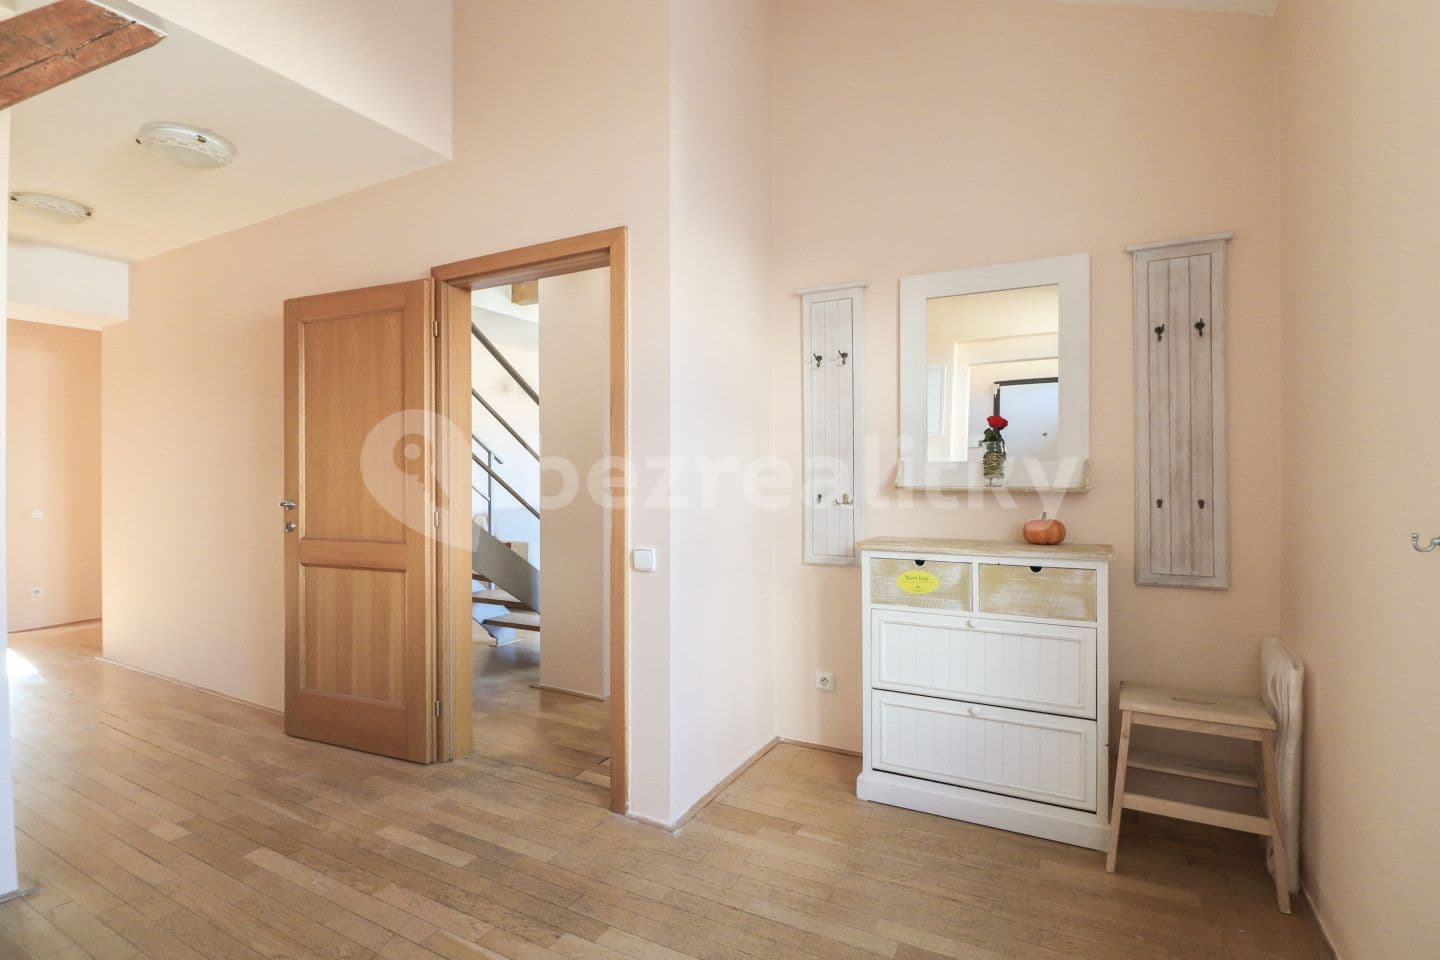 3 bedroom with open-plan kitchen flat for sale, 140 m², Zborovská, Prague, Prague